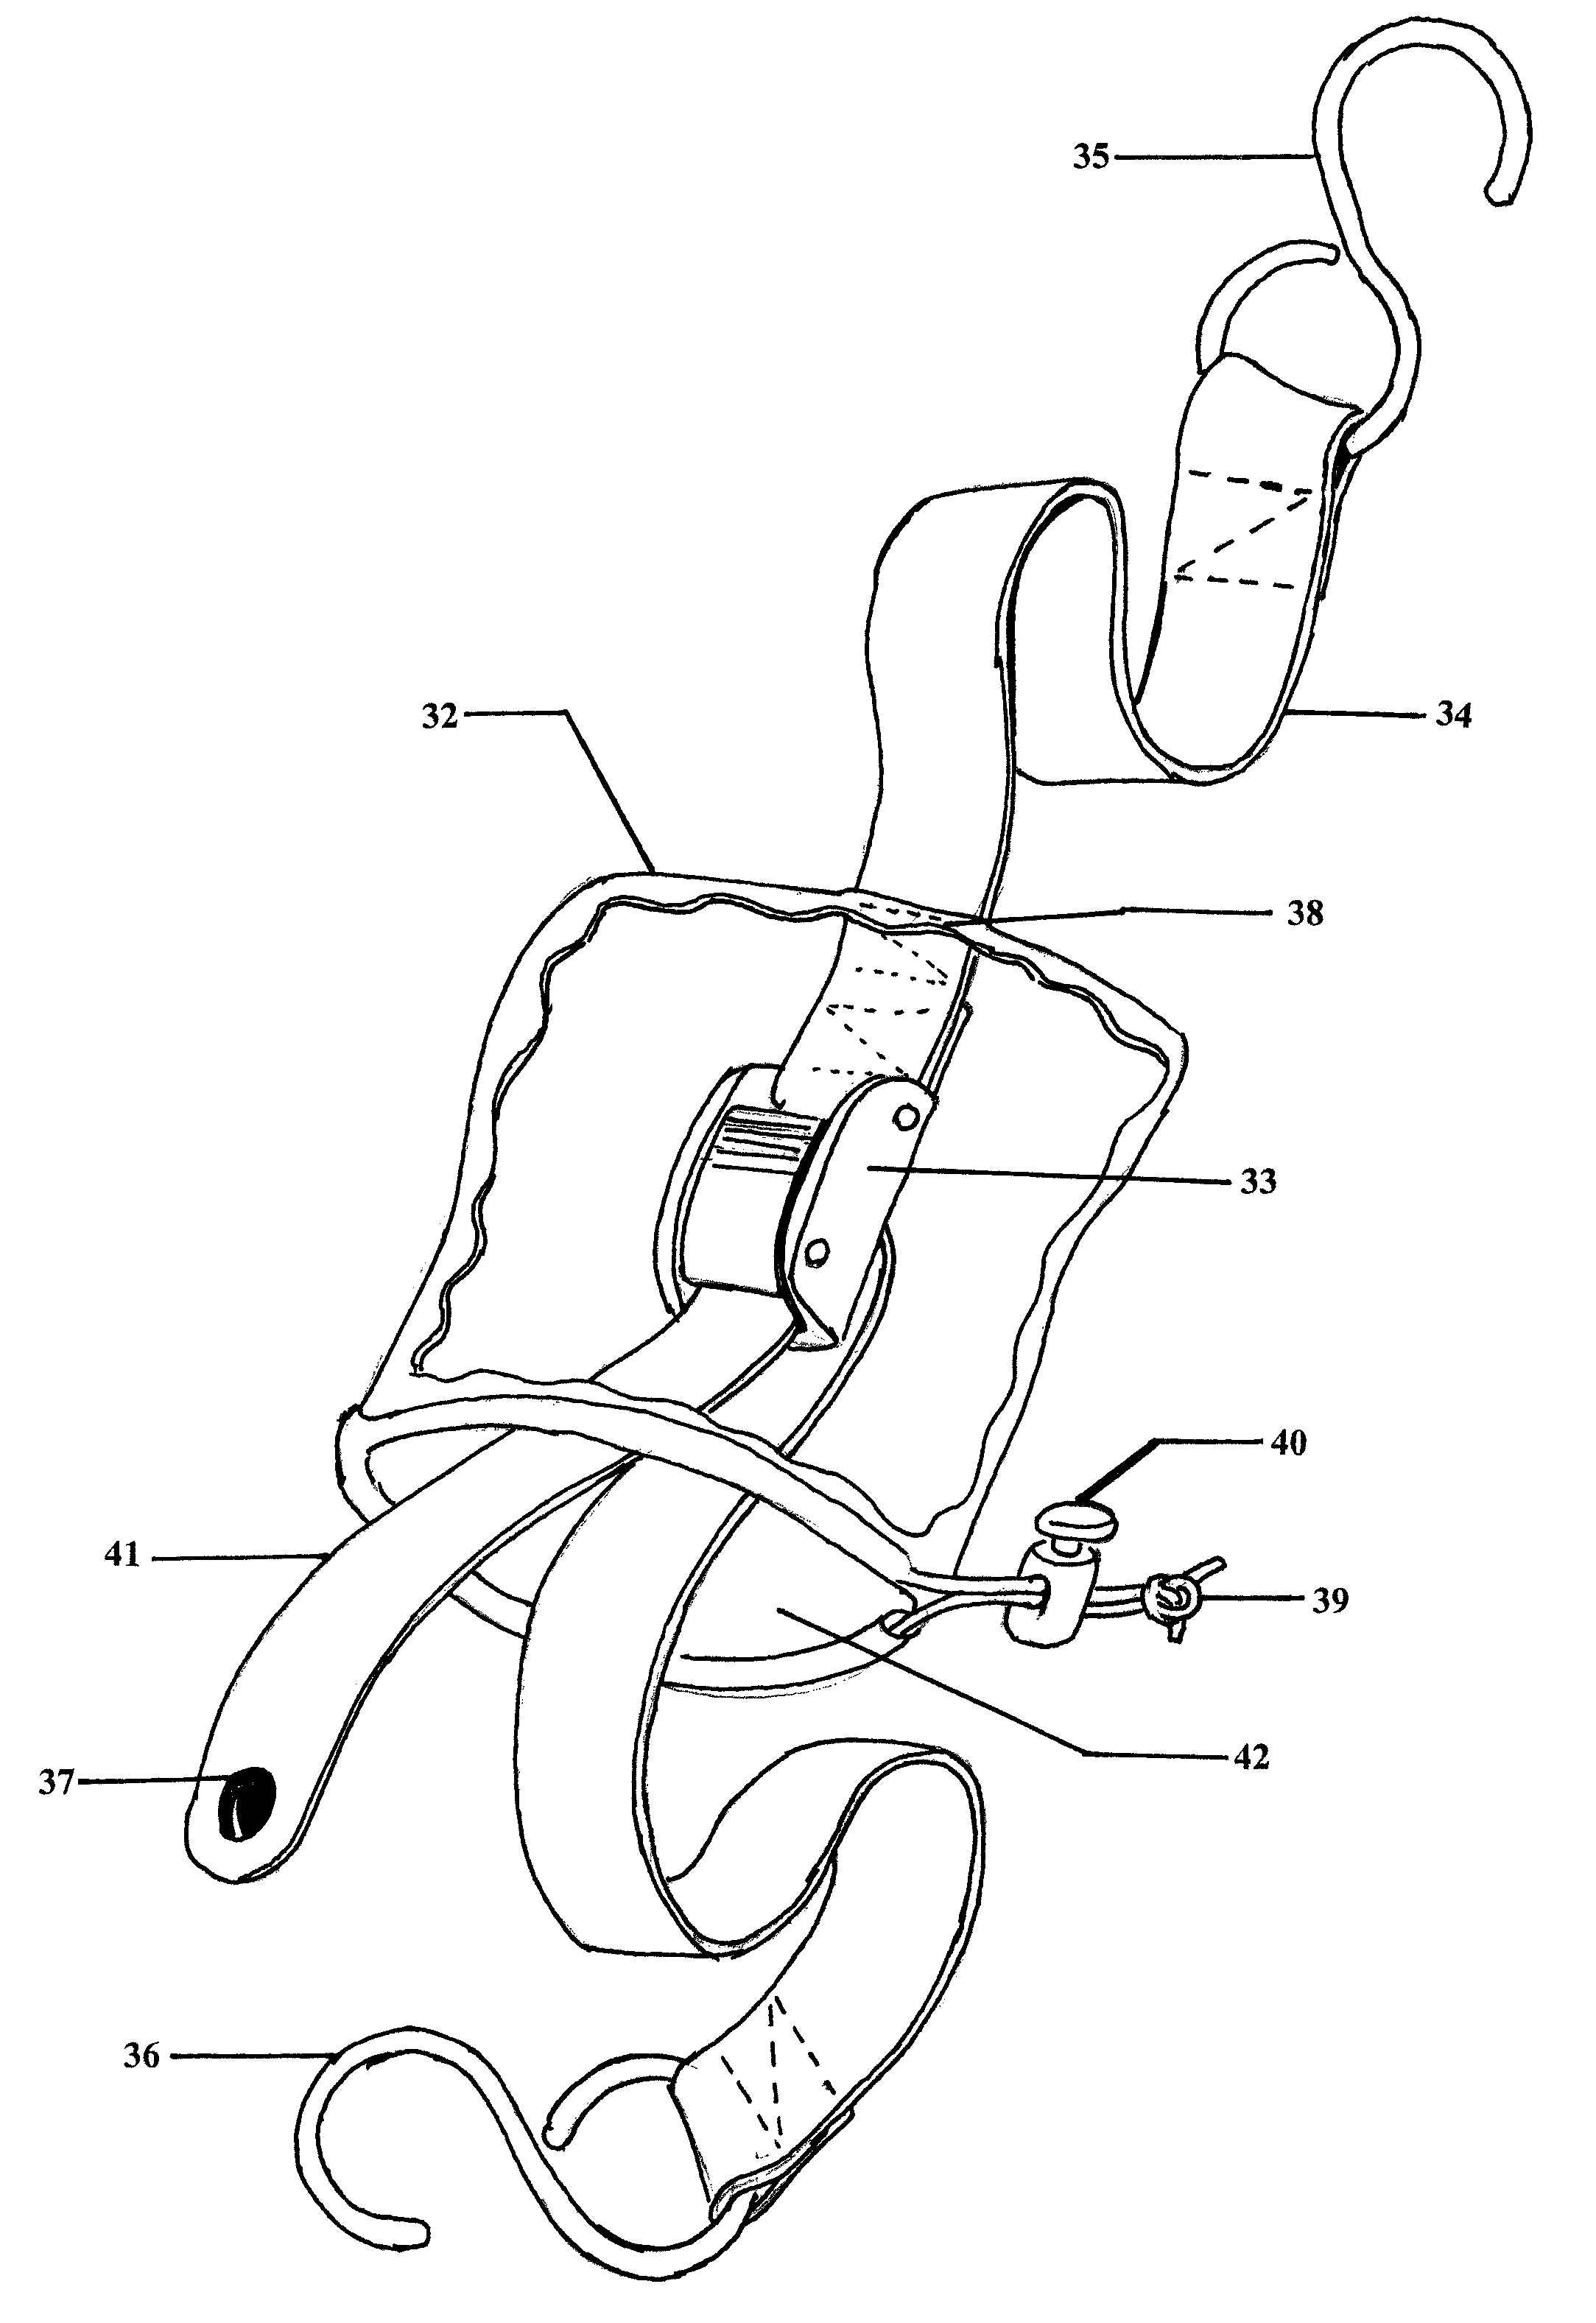 Tie-down strap device